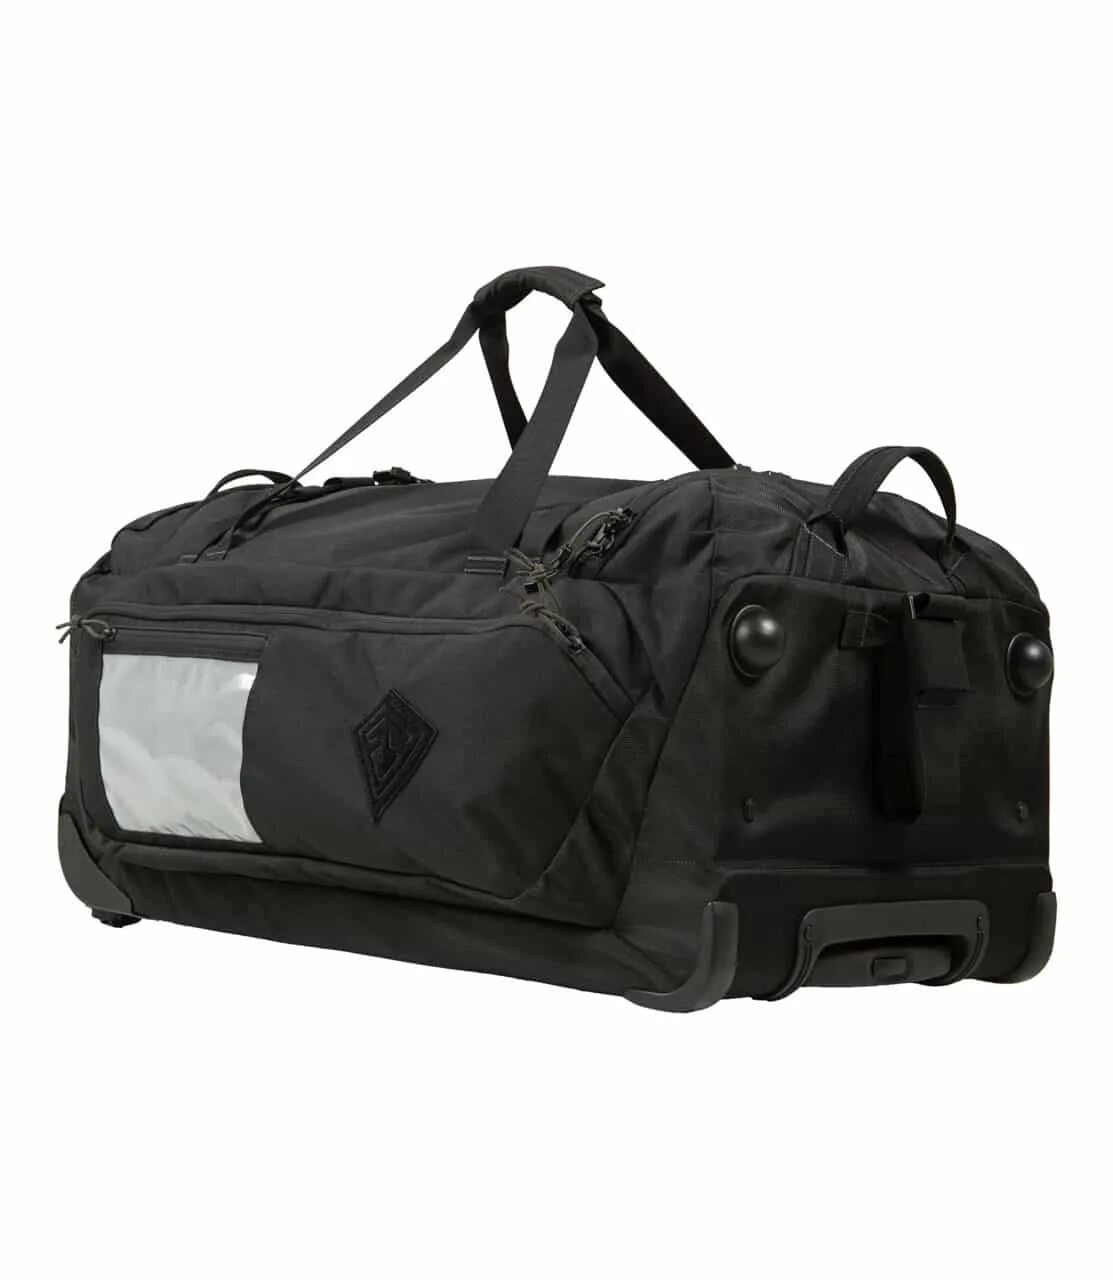 Roll bags. Duffle Roller Bag. Рюкзак "Duffle" Tactical Pro, 75л, HDT FG. Rolling Duffel Bag. Tactical Roller Bag.